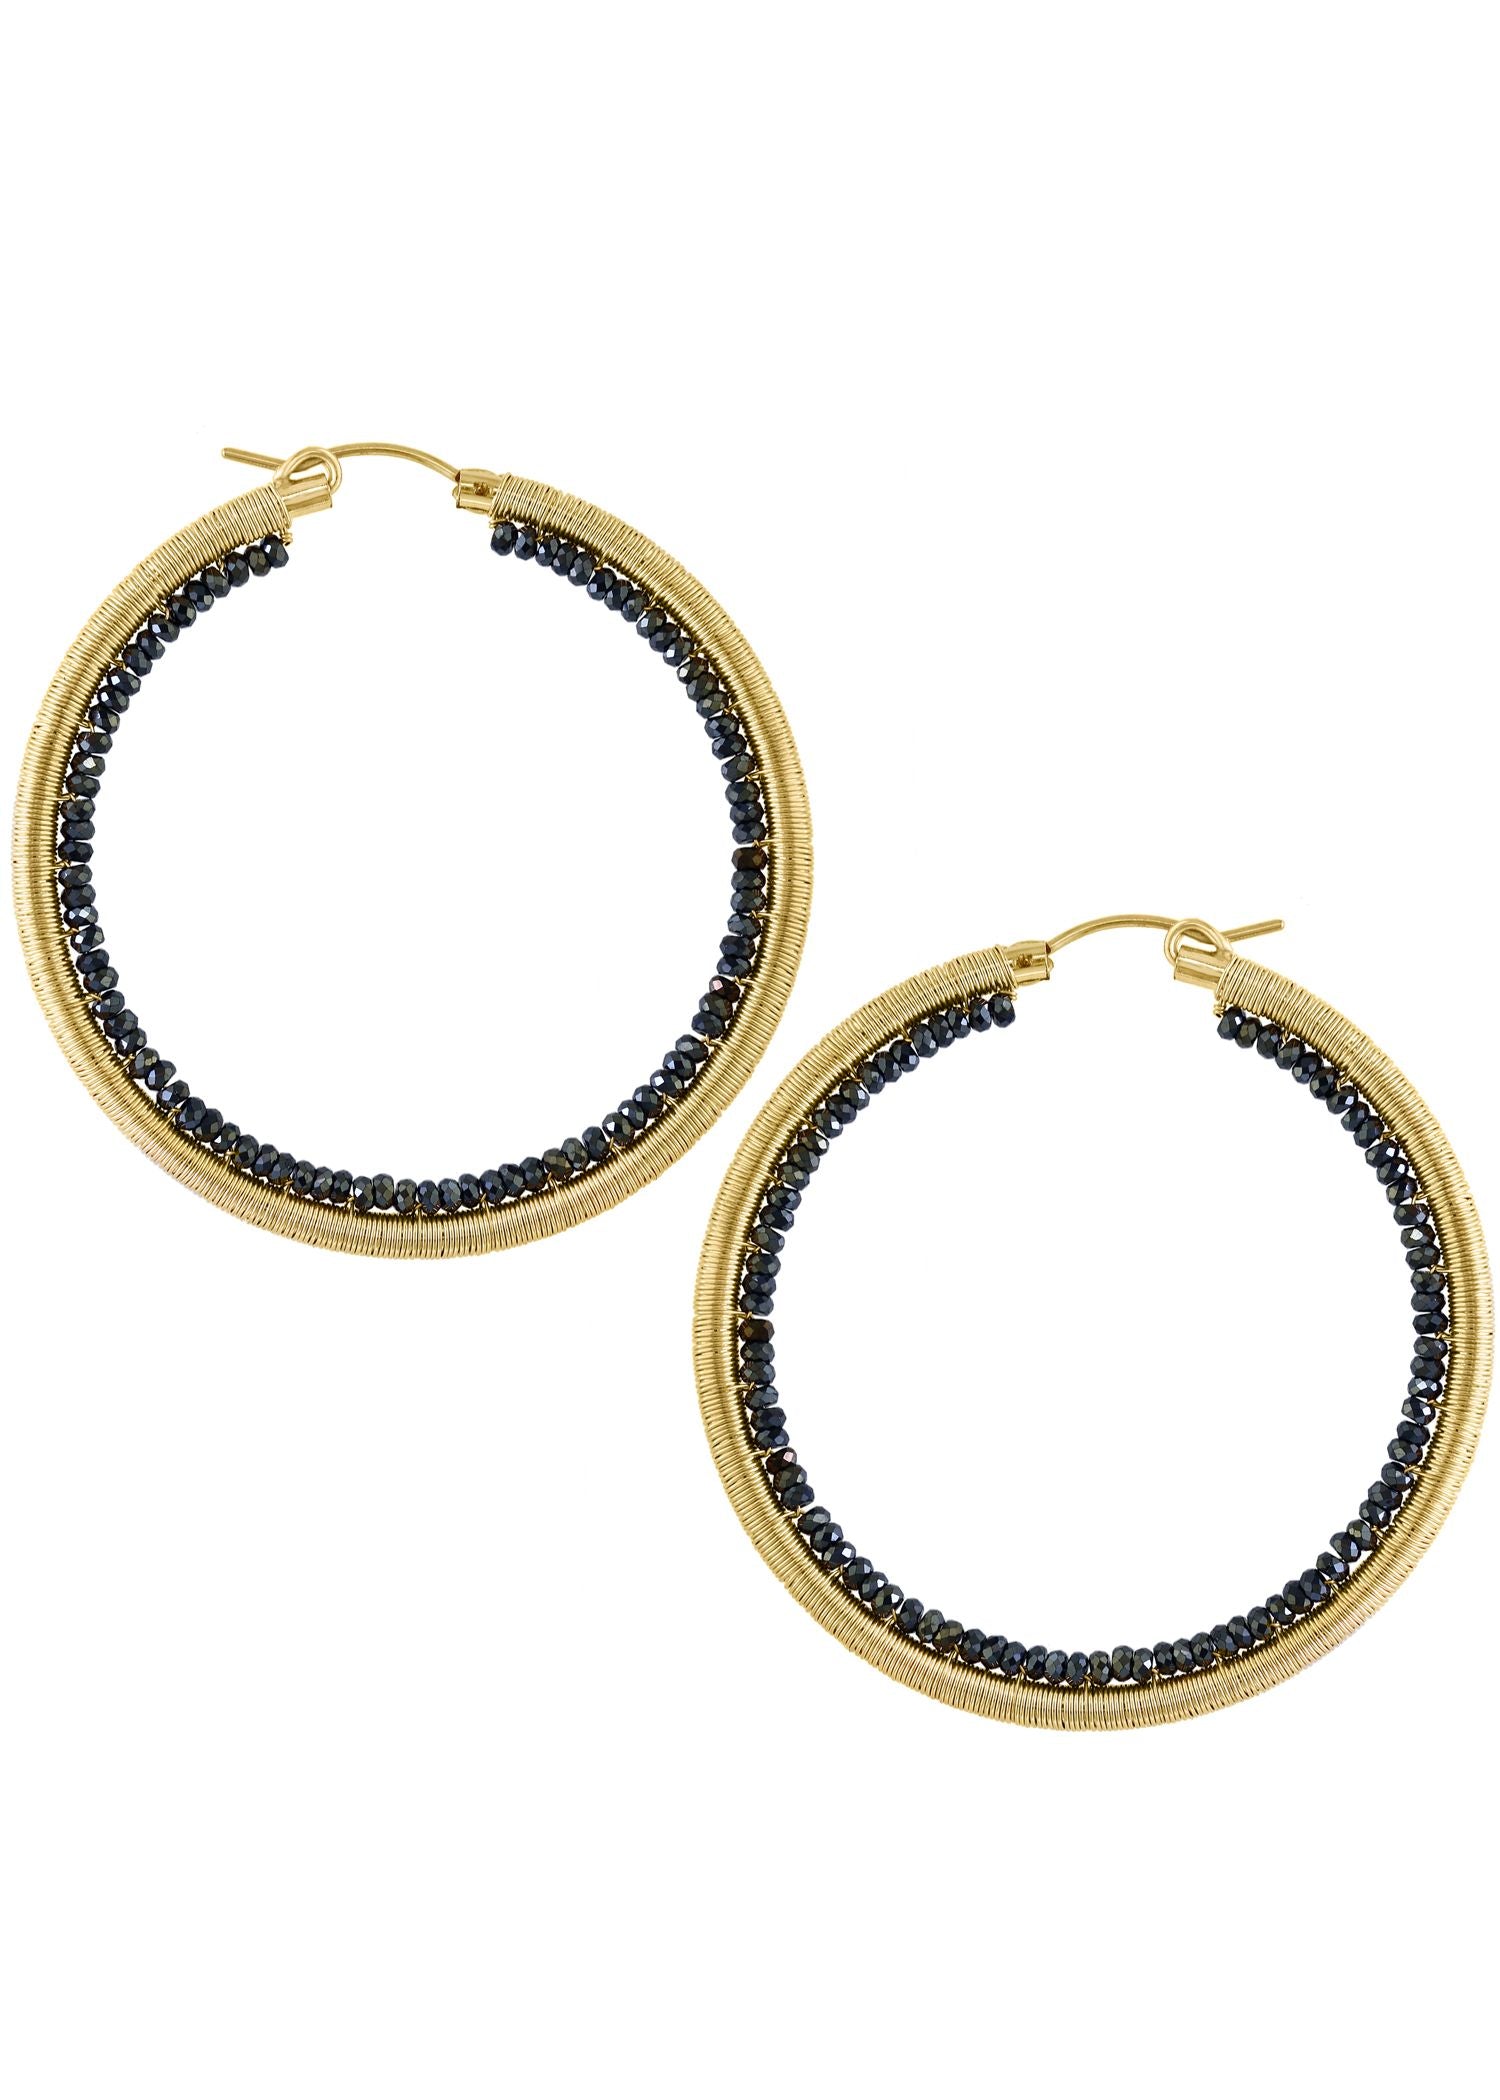 Black spinel 14k gold fill Earrings measure 1-15/16" in diameter Handmade in our Los Angeles studio